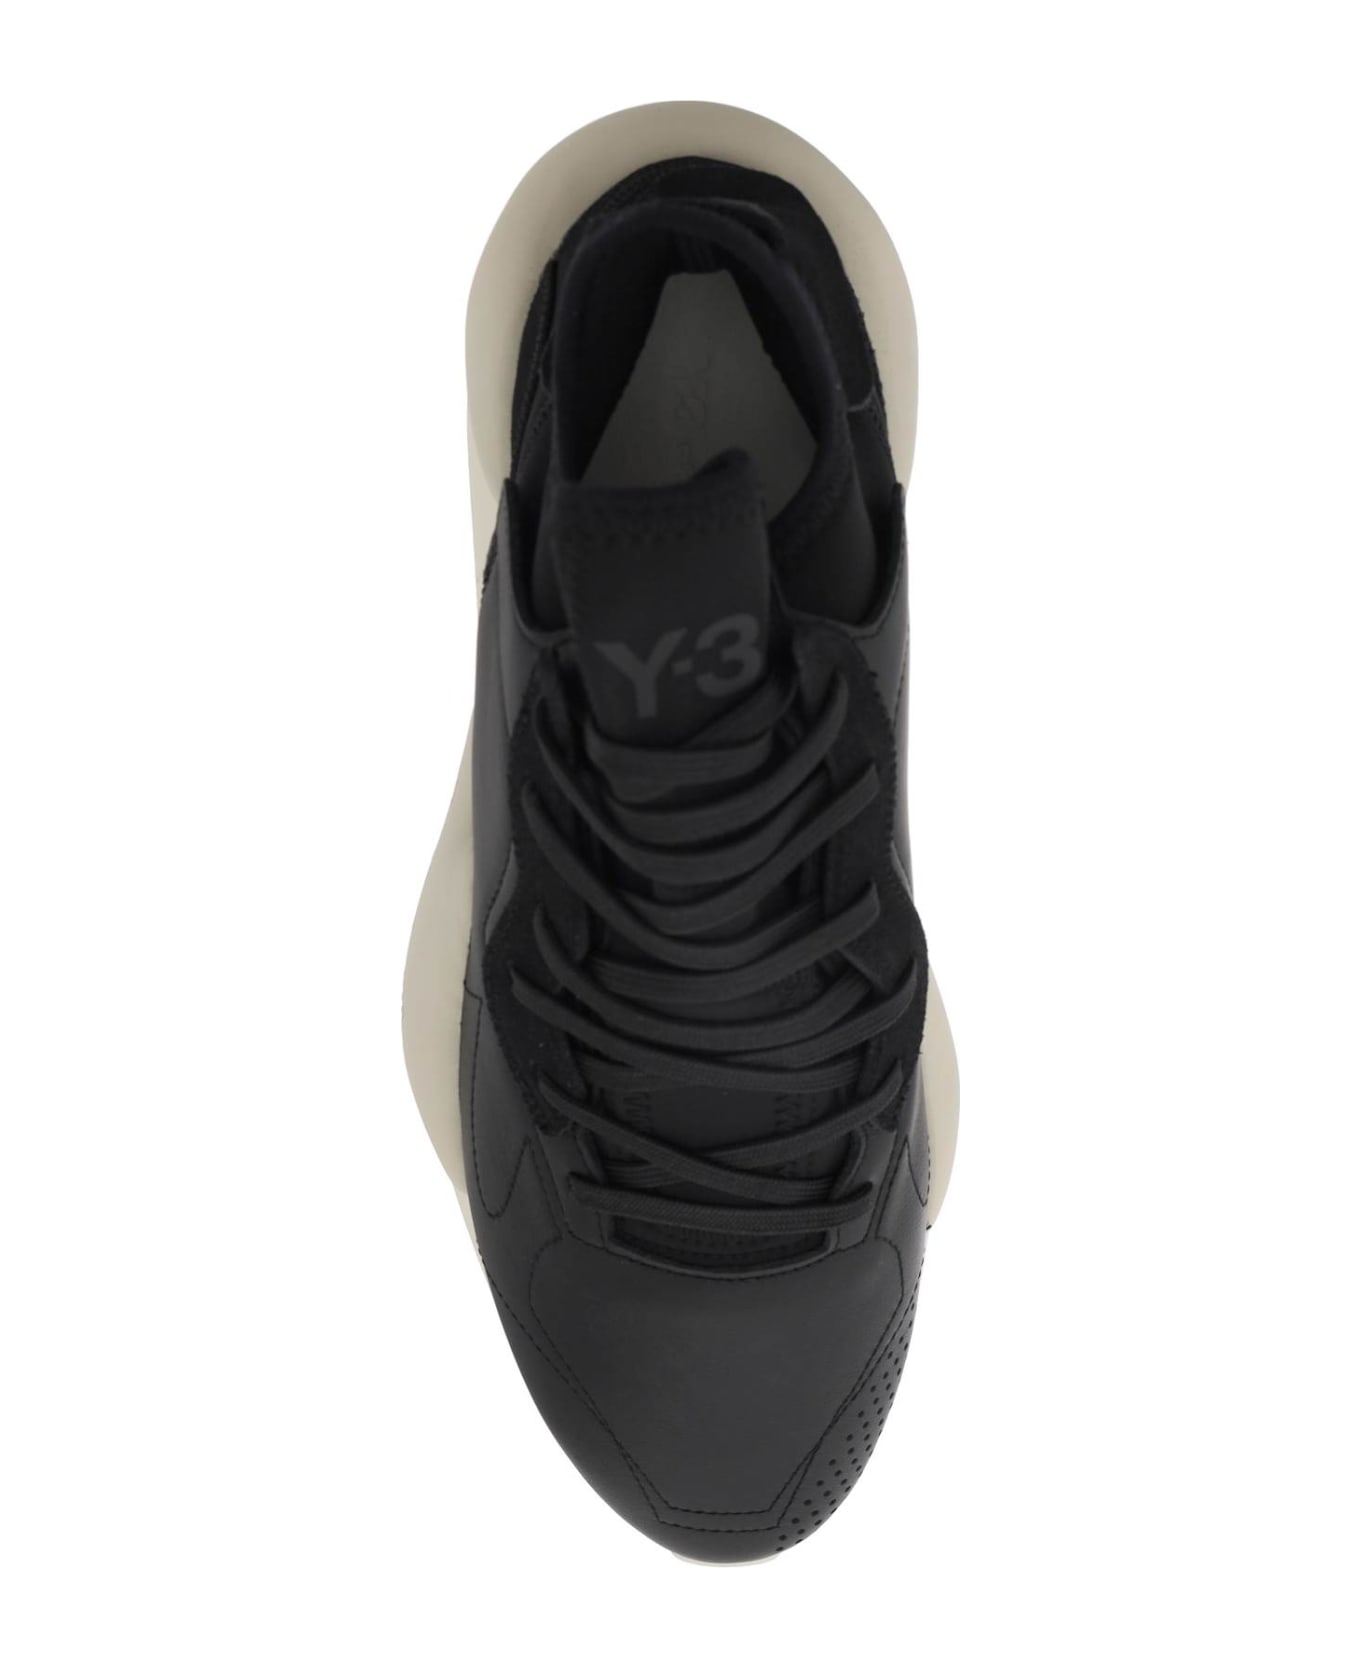 Y-3 Kaiwa Sneakers - BLACK OWHITE CBROWN (Black)